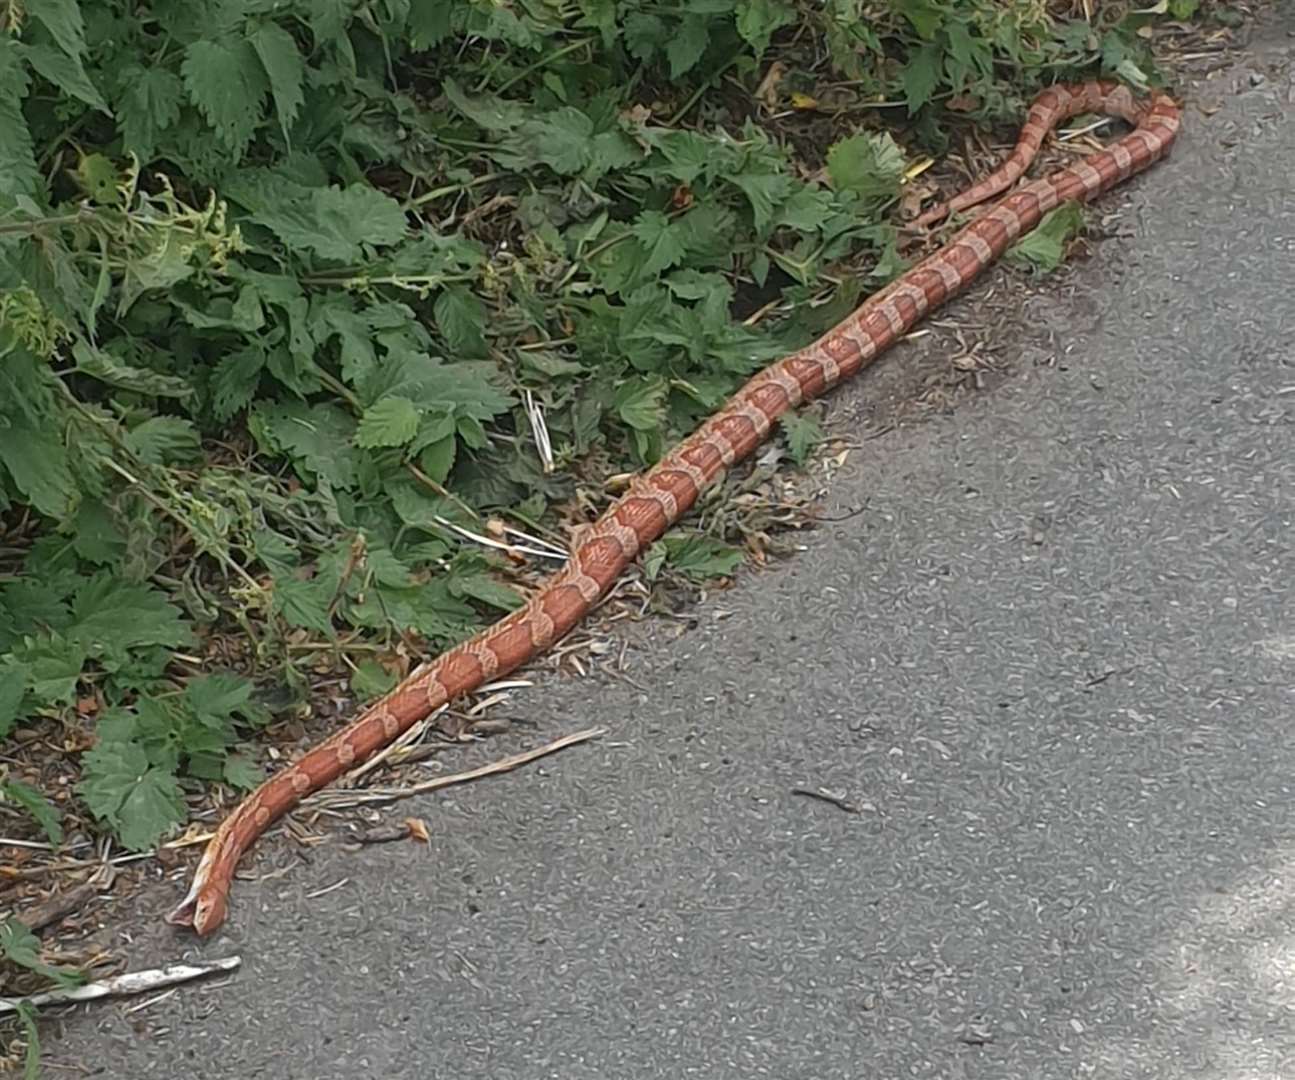 A snake was found in Borden near Sittingbourne. Picture: Lorraine Tompkins